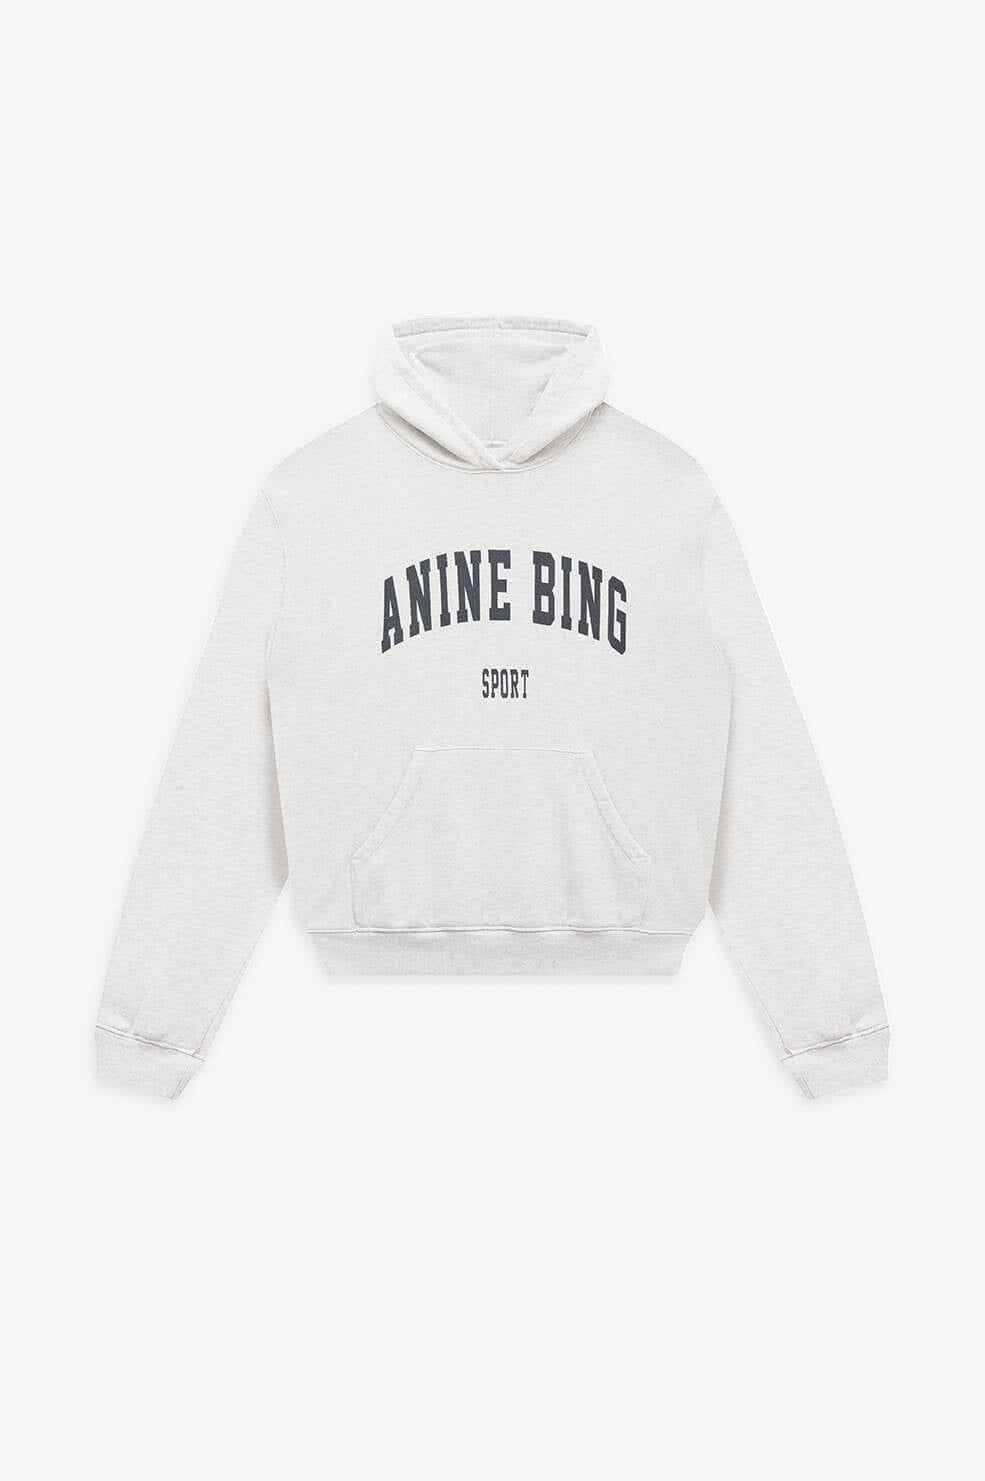 Anine Bing - Harvey Sweatshirt in Heather Grey